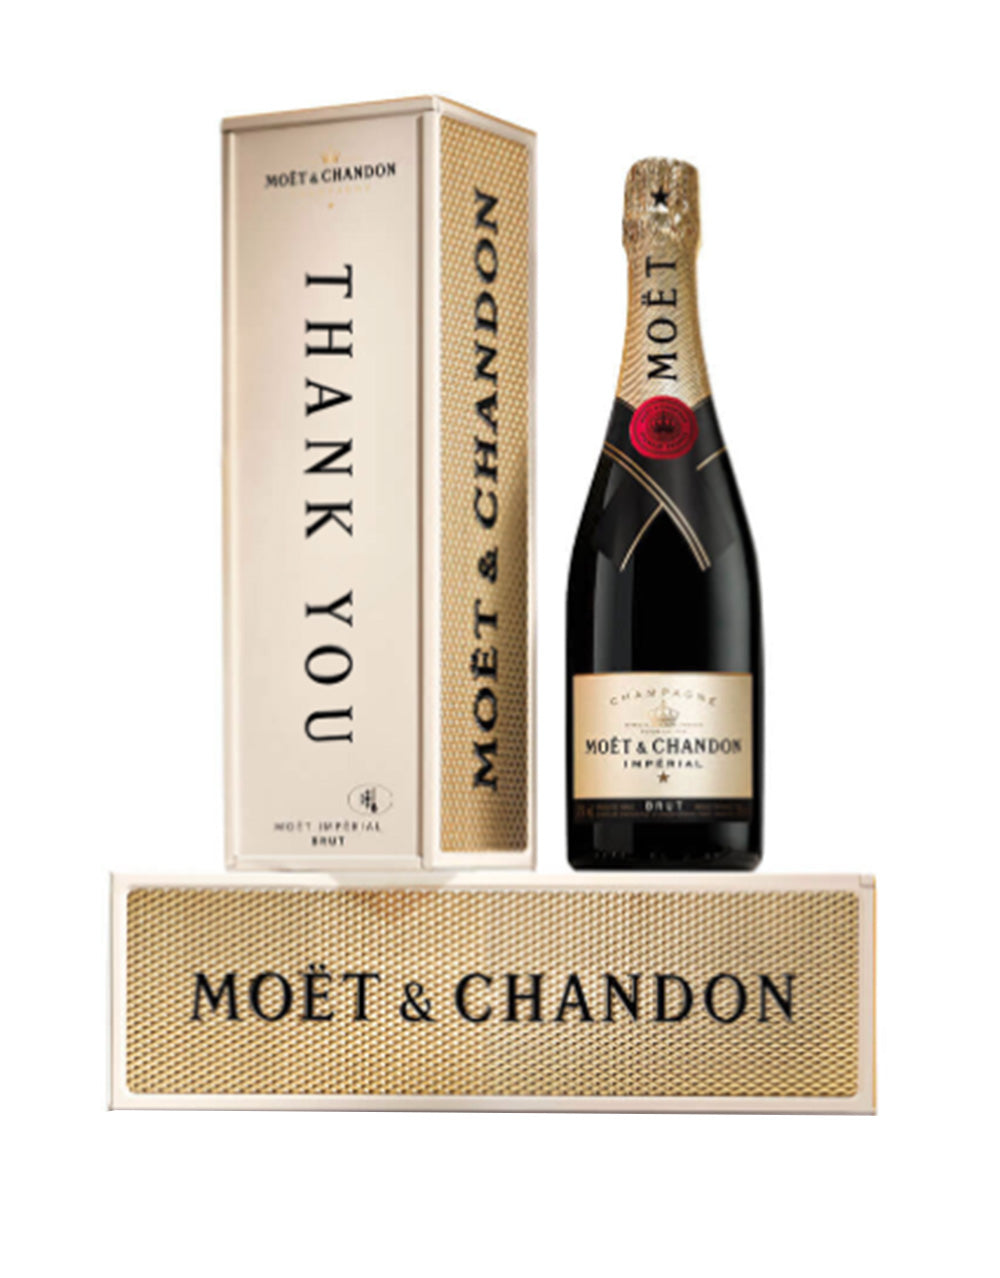 Moet & Chandon Imperial wine bottle, Moet & Chandon Imperial Brut